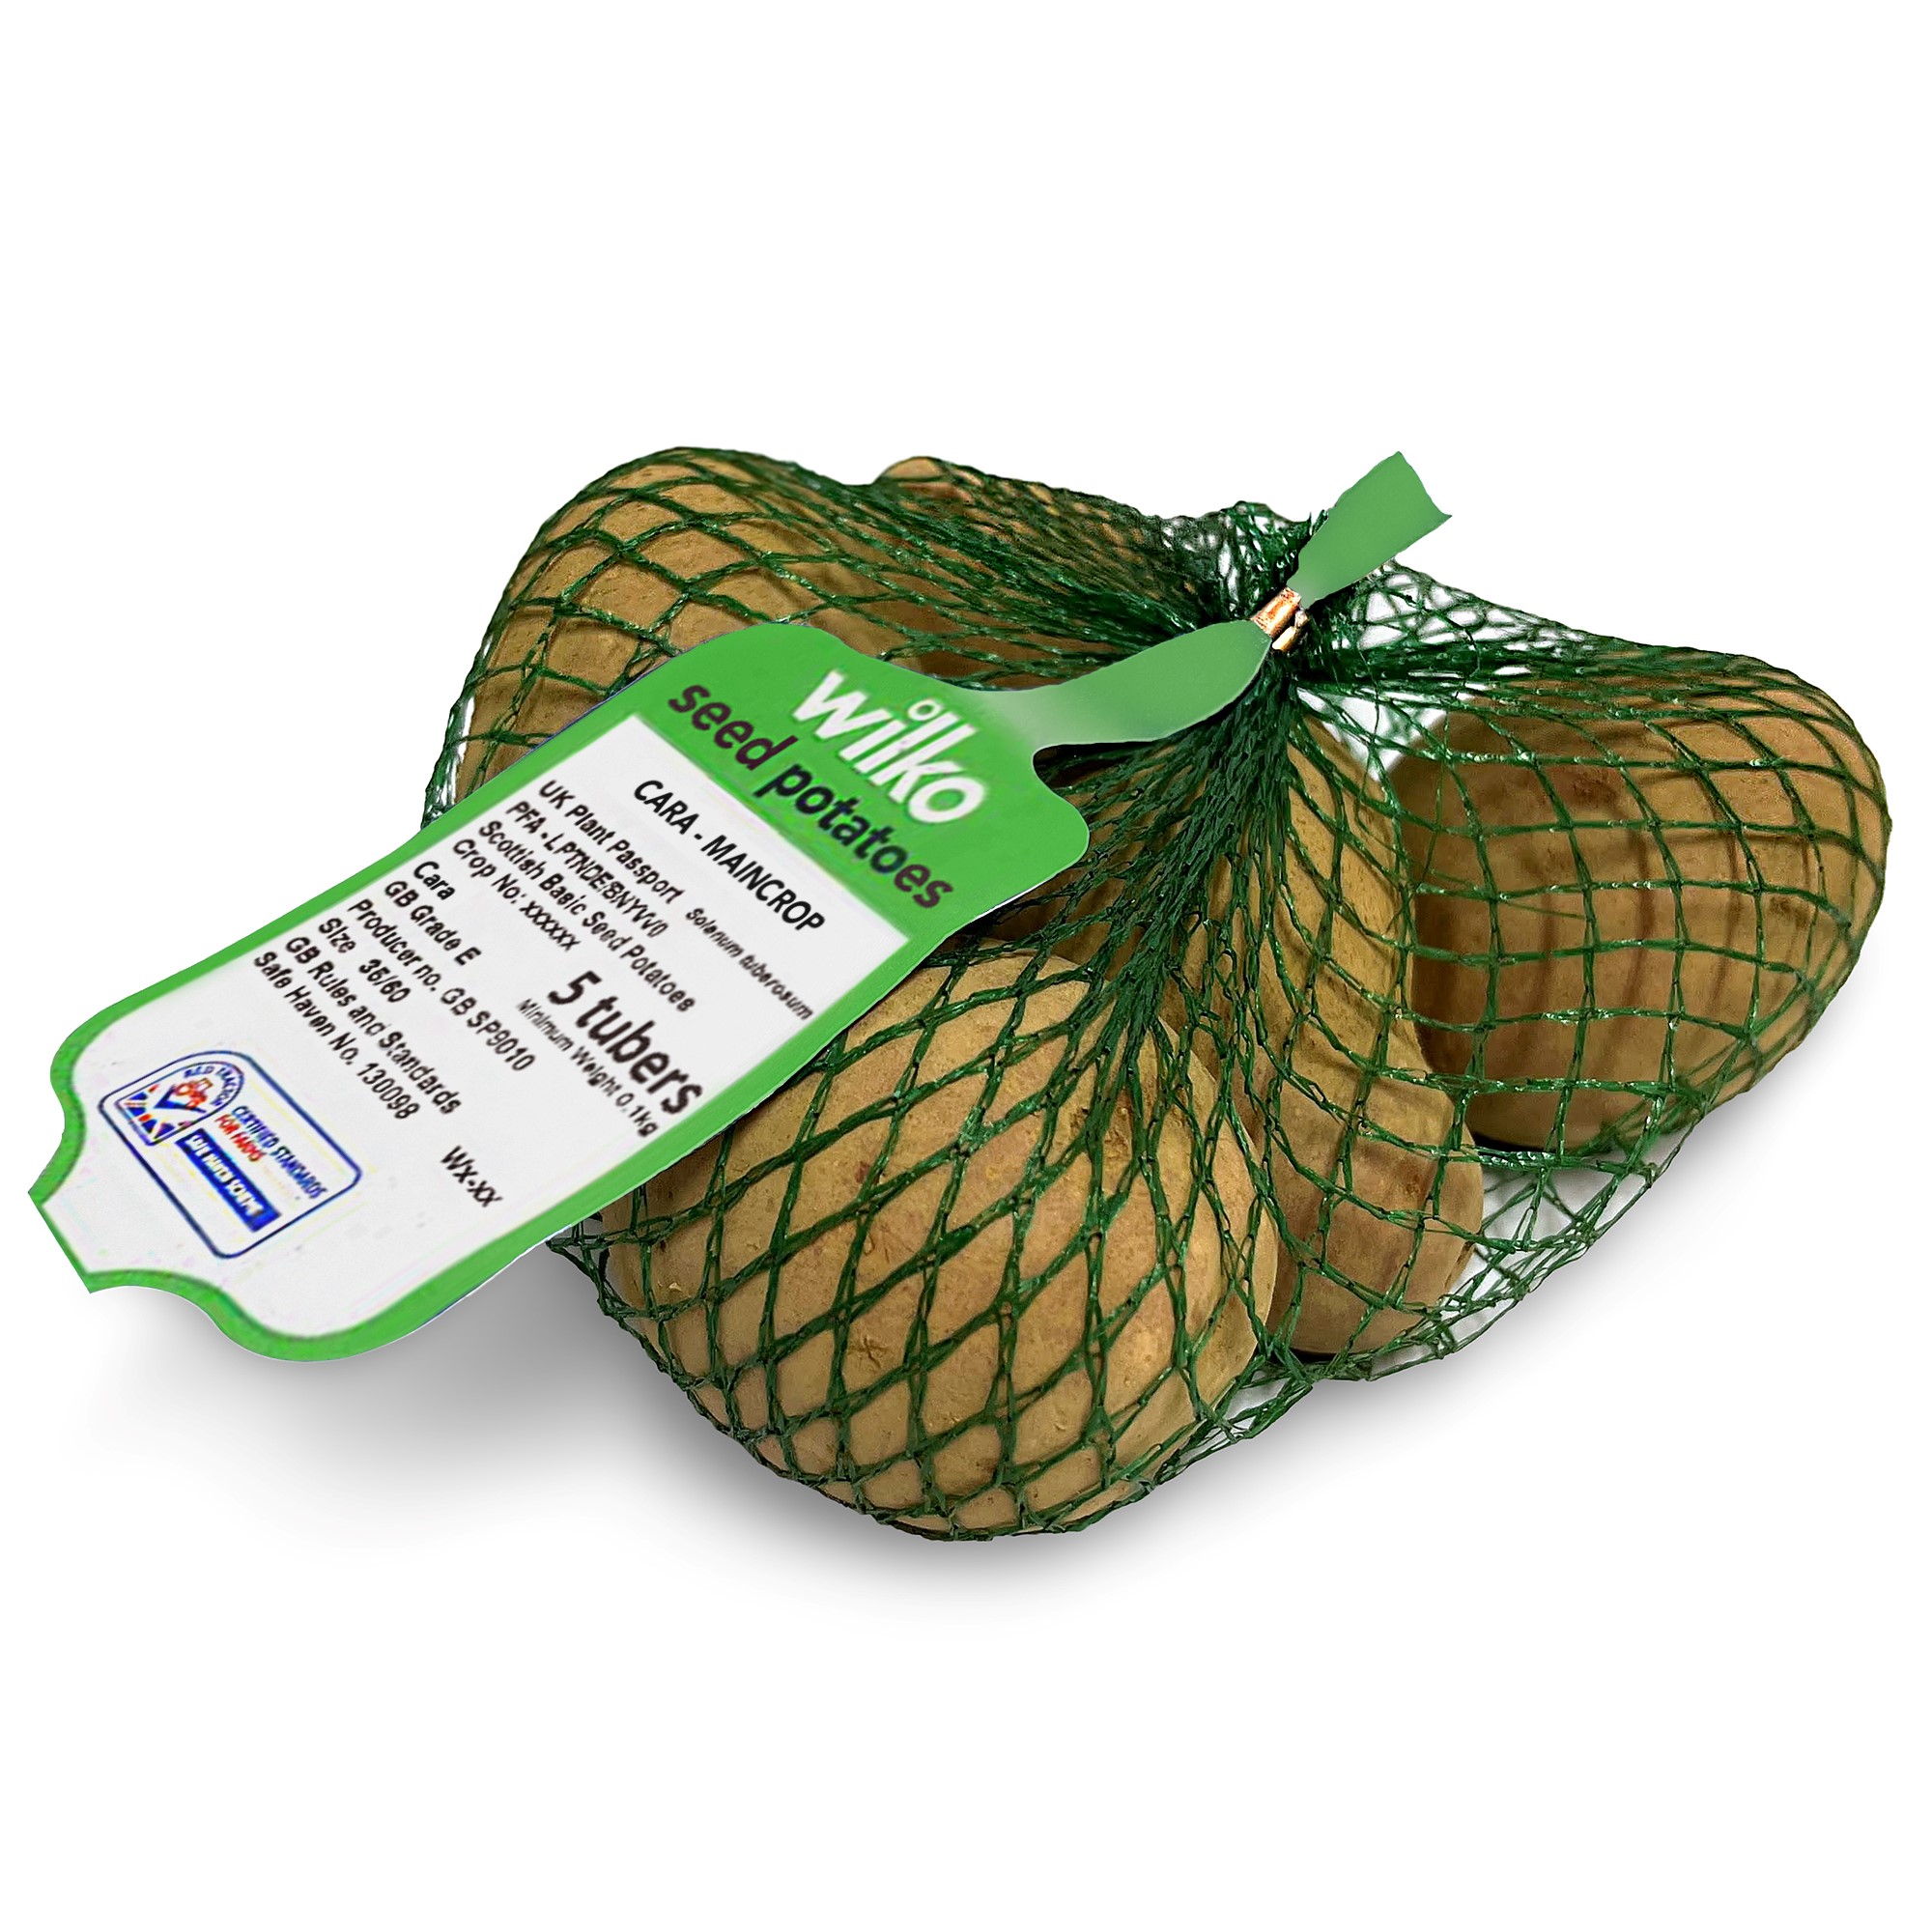 Wilko Potato Cara Main Crop Seed 5 Pack Image 2